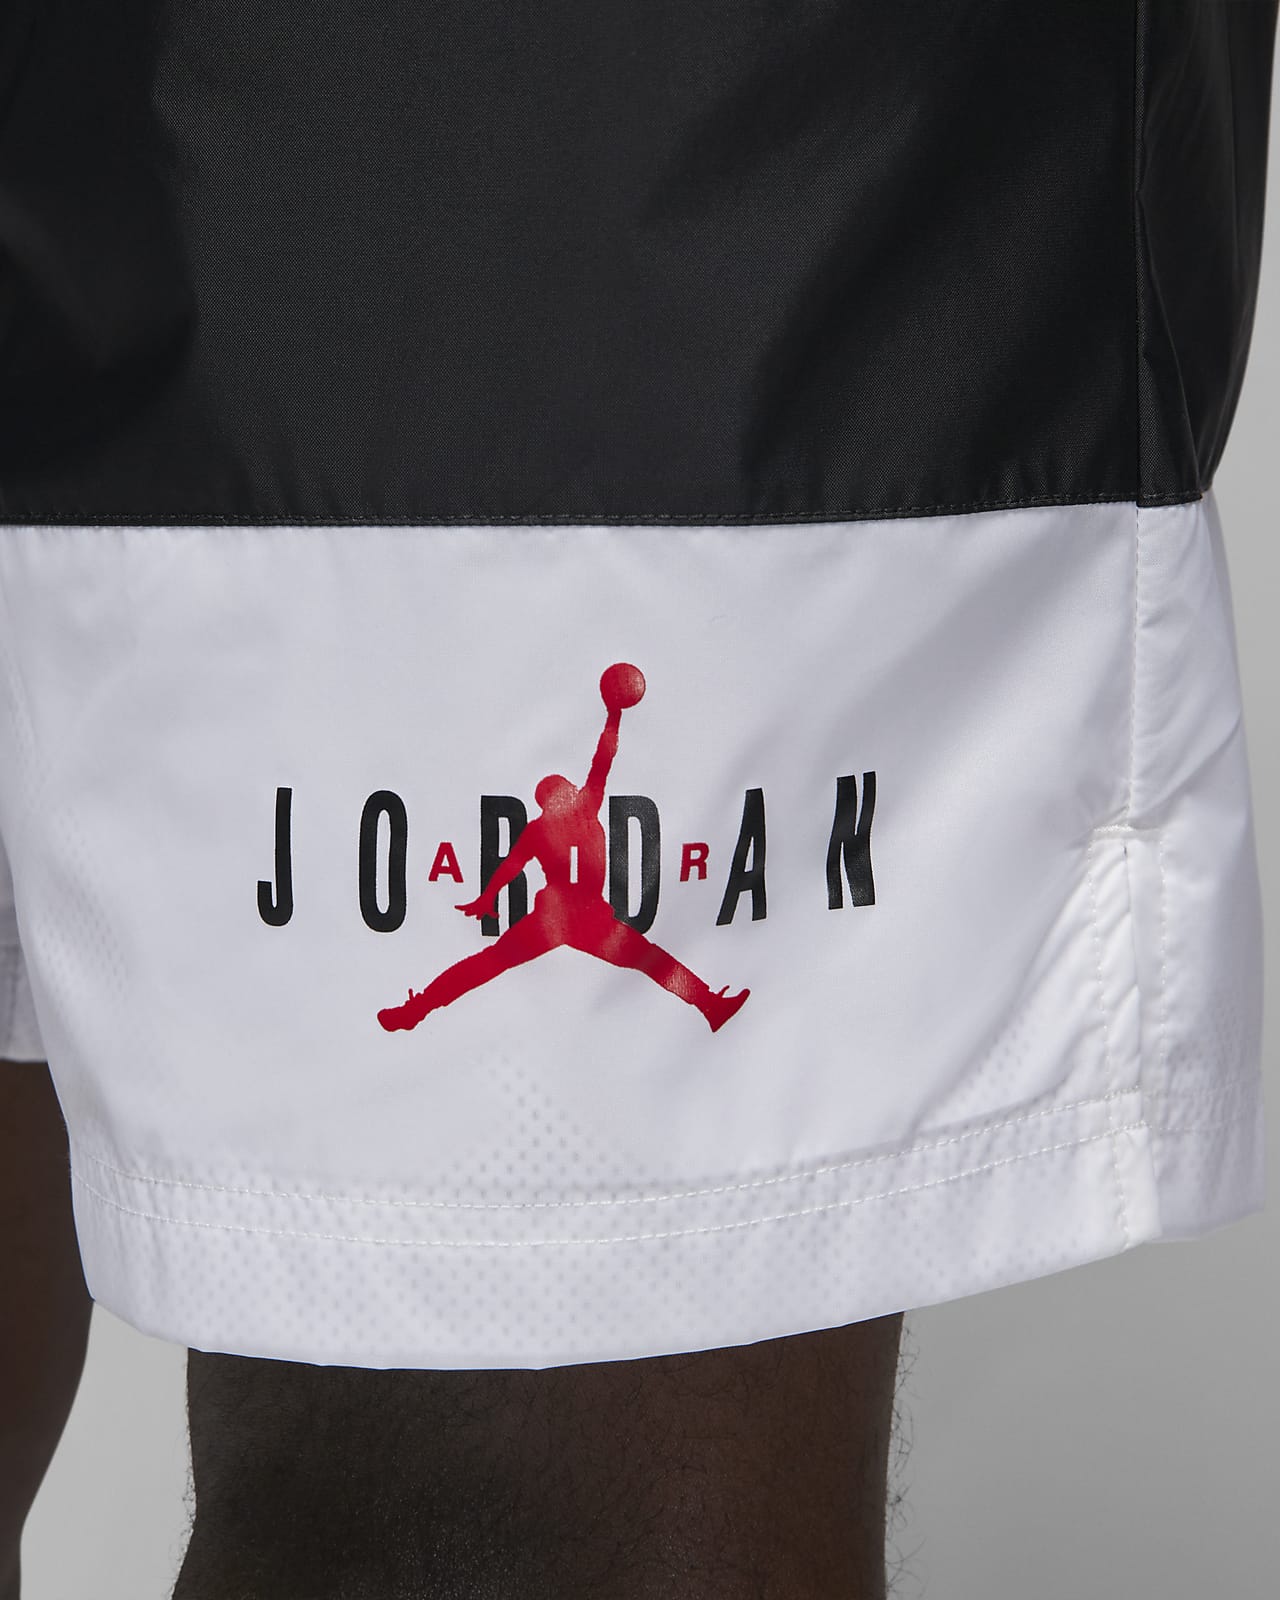 Jordan Essentials Men's Woven Shorts. Nike MY